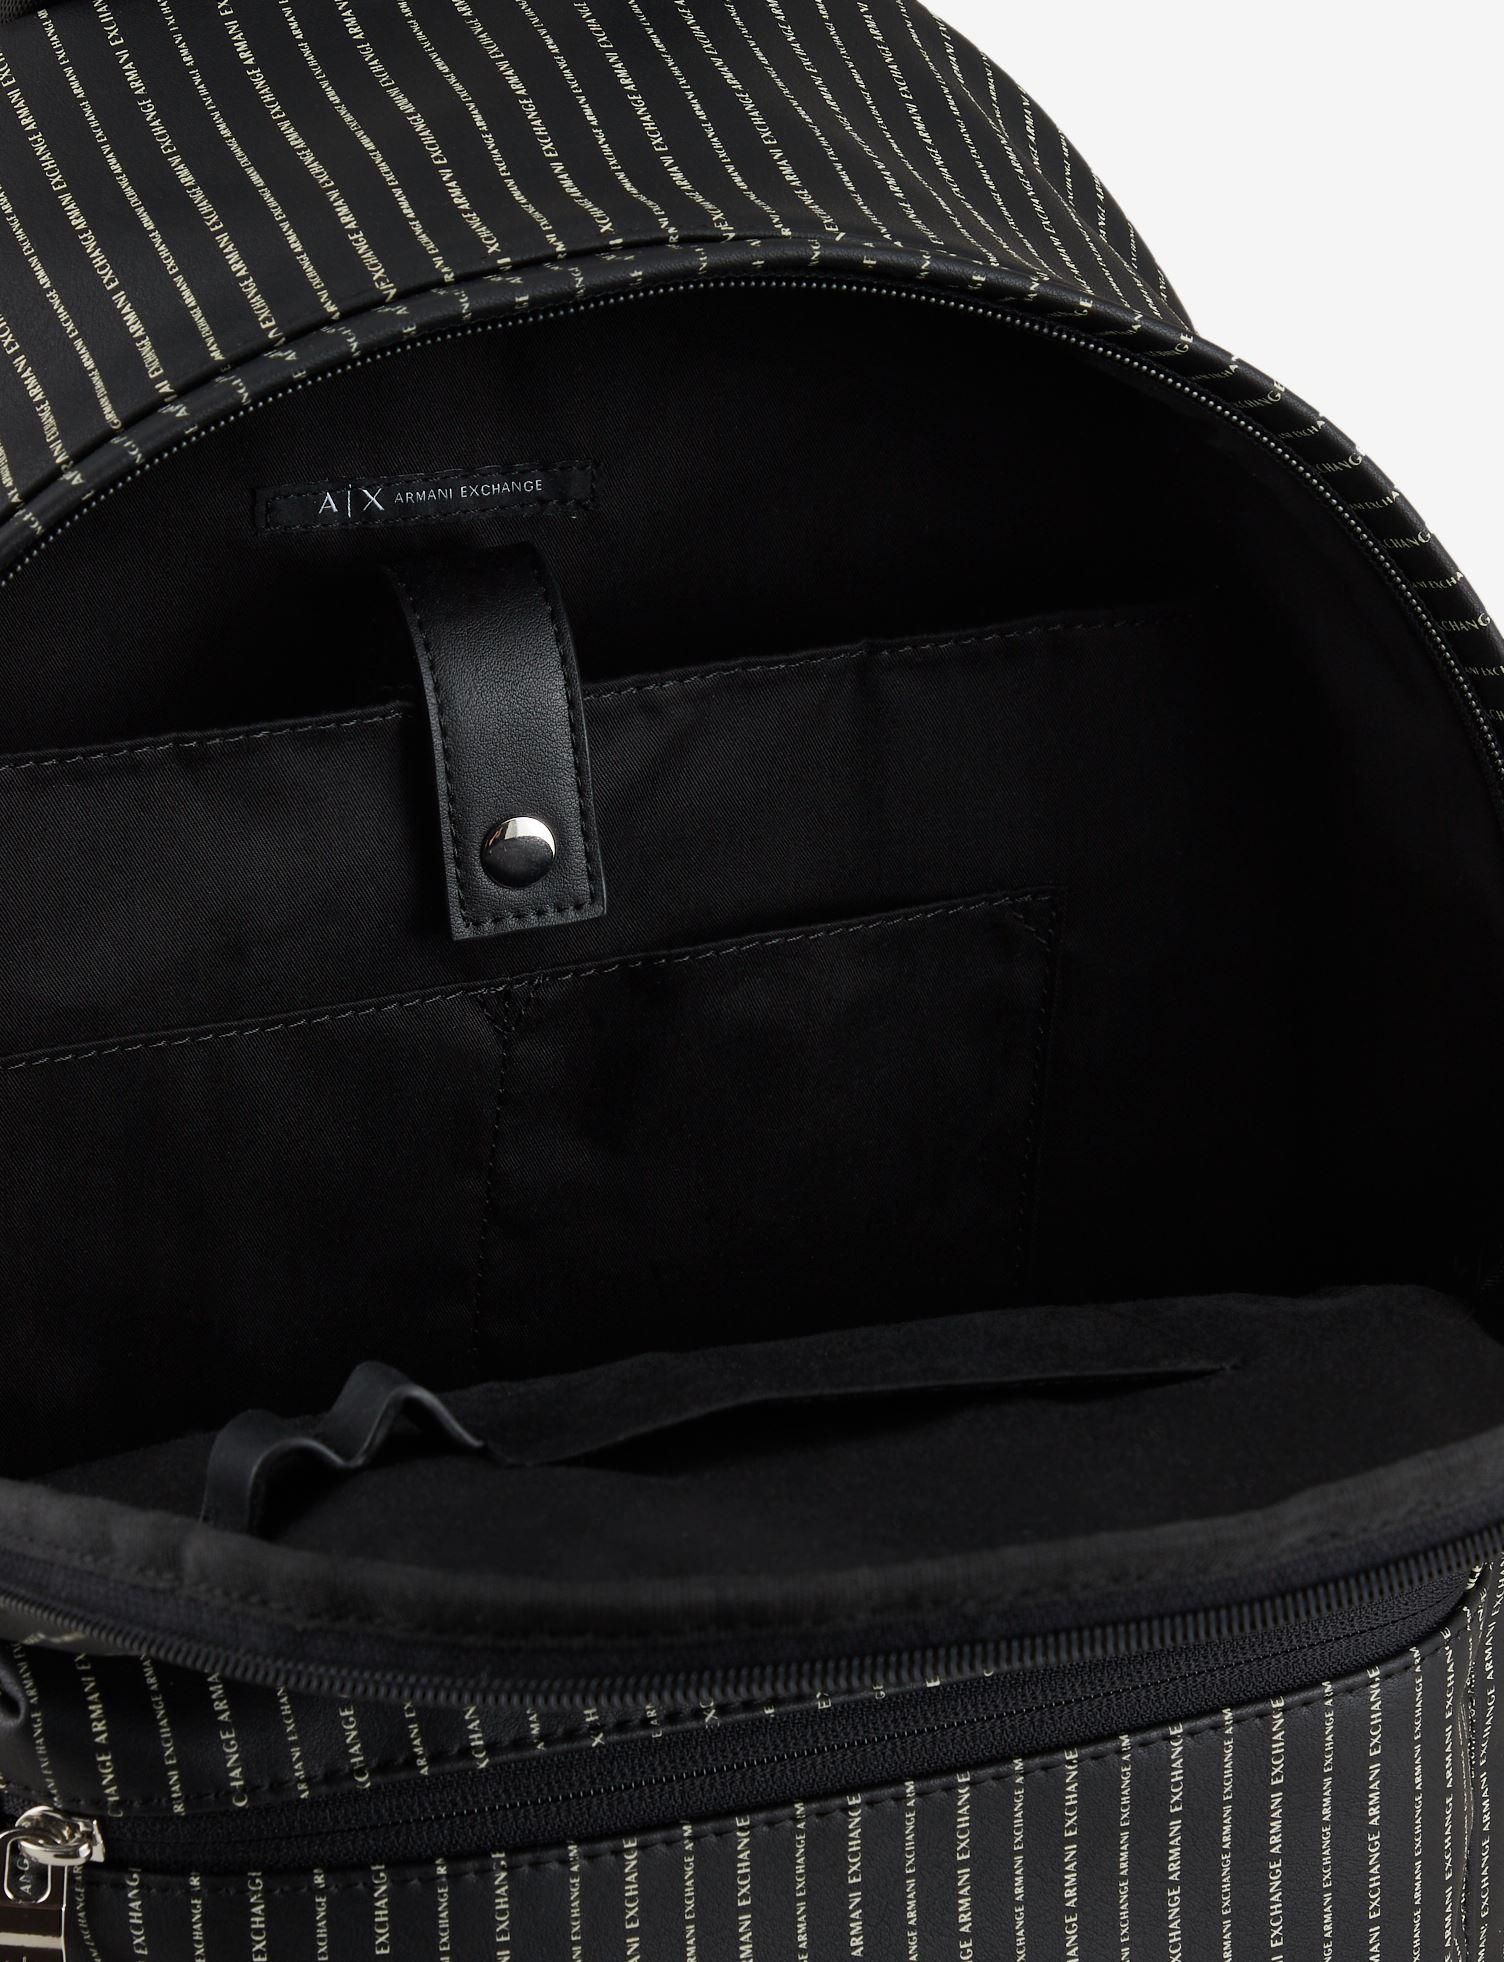 Armani Exchange Backpack in Black for Men - Save 33% | Lyst